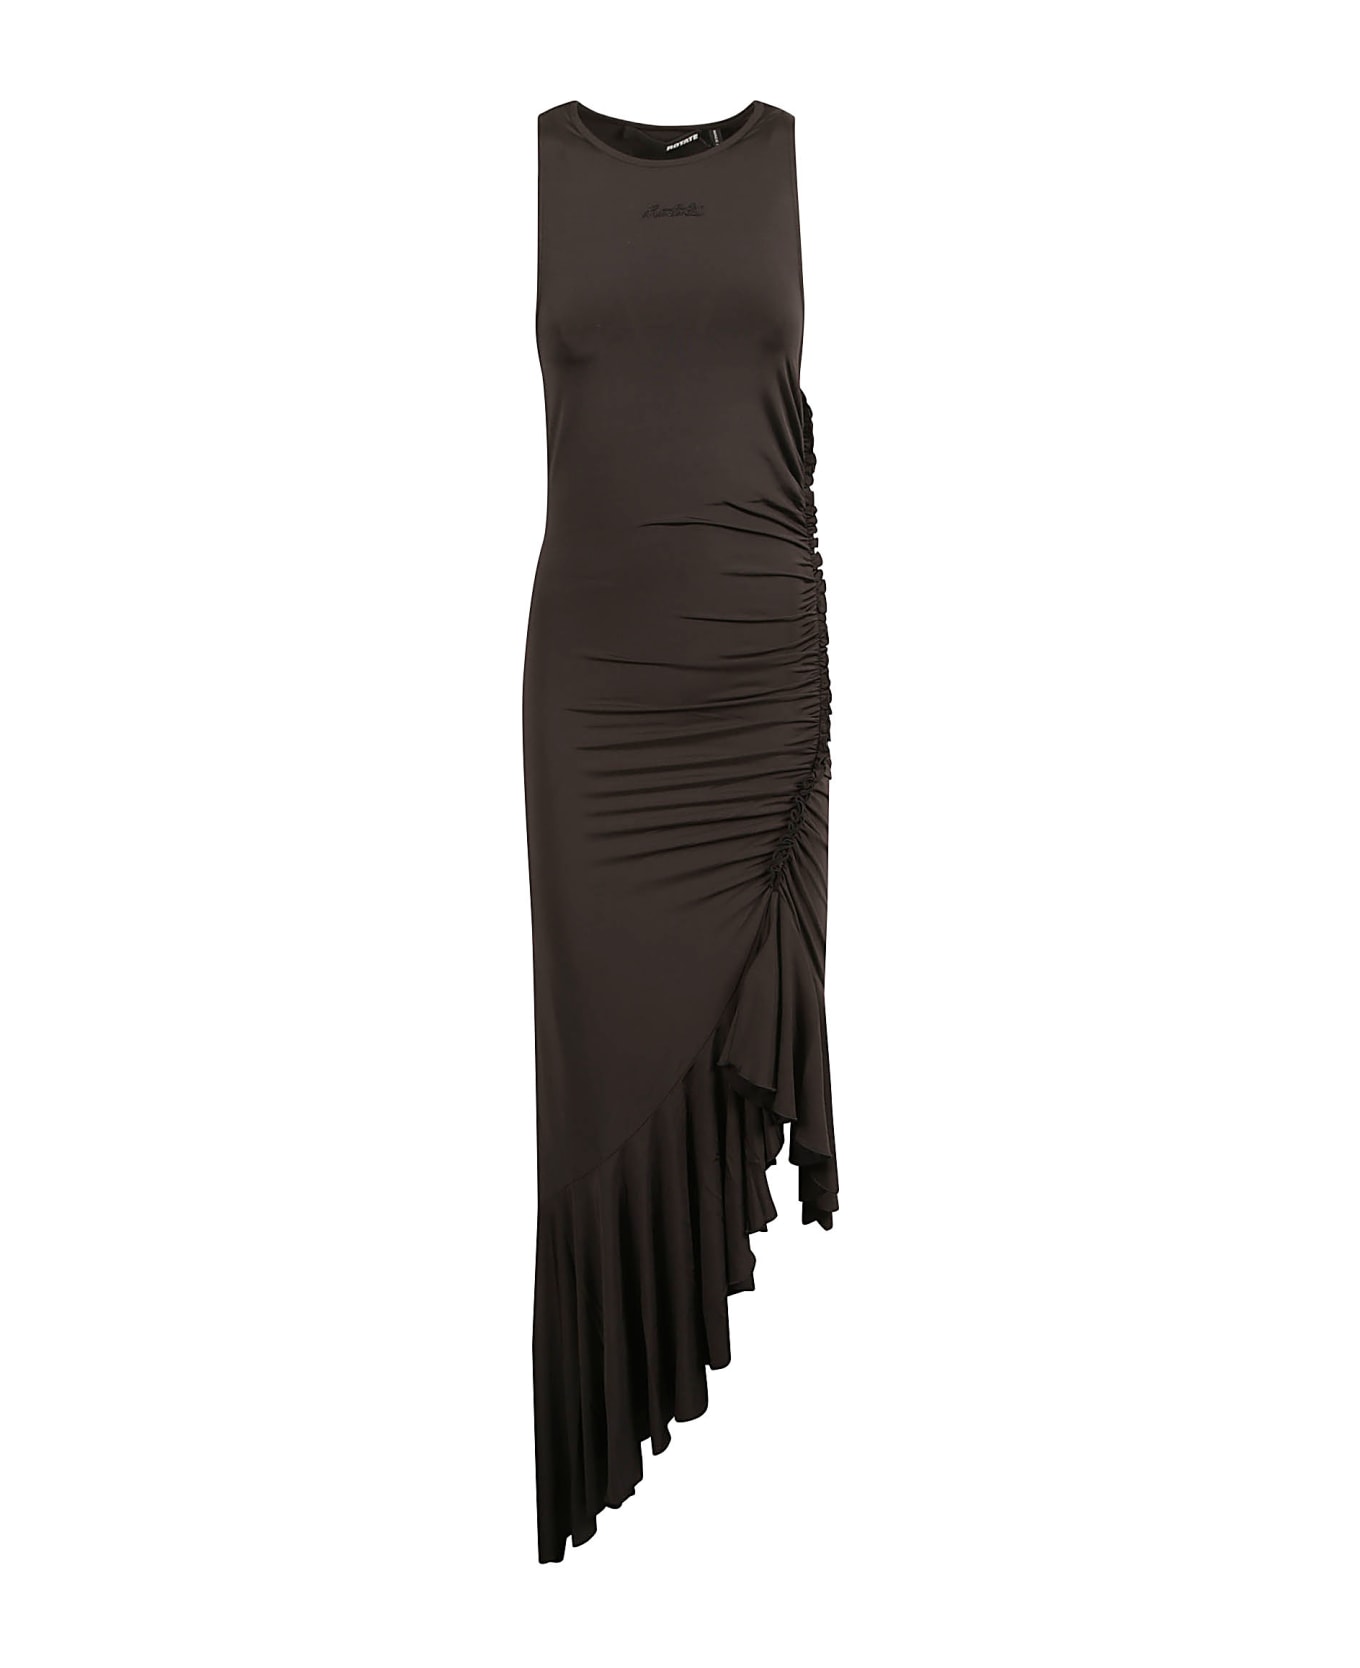 Rotate by Birger Christensen Asymmetric Dress - Black